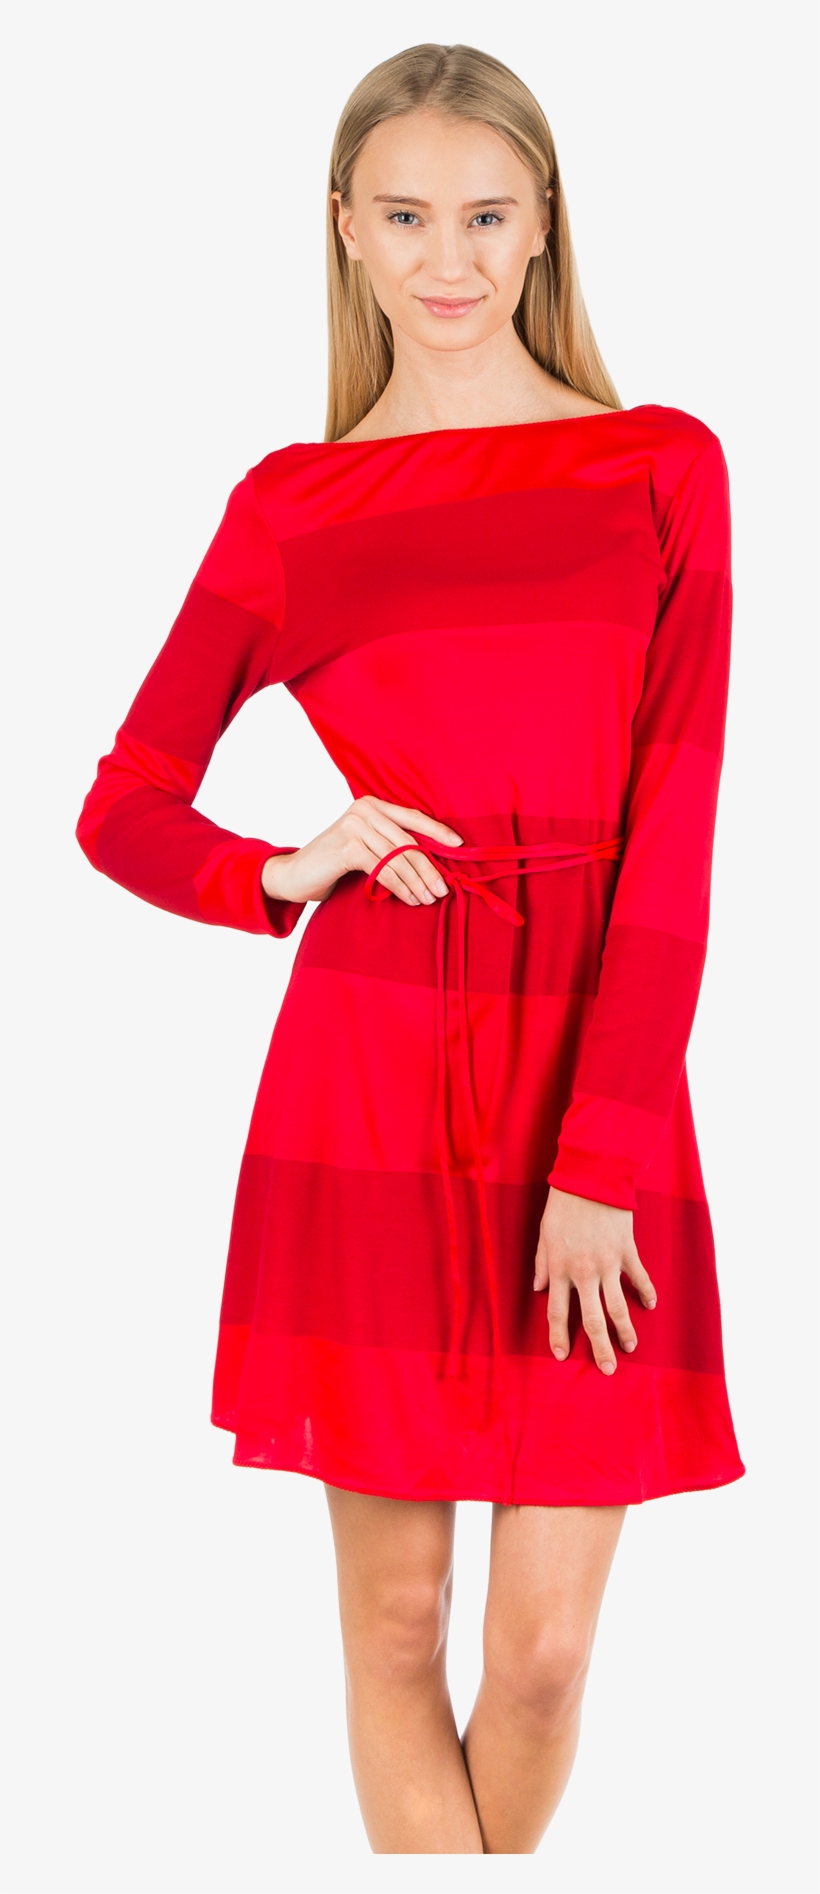 Dress Gigi Hadid Slash Nk - Chemise Rouge Longue Femme, transparent png #8409619